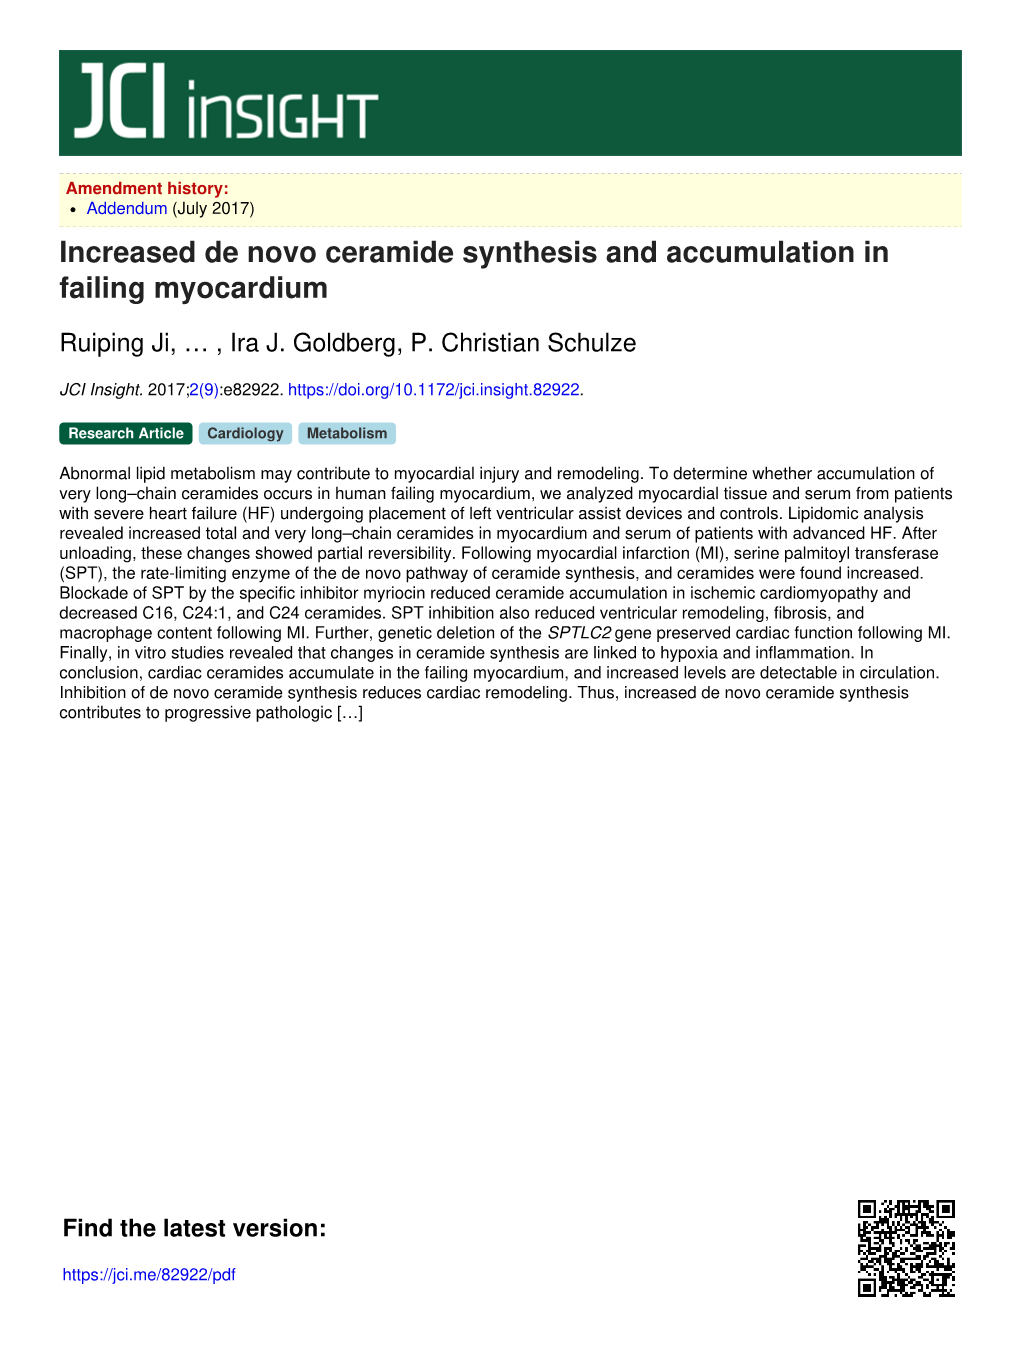 Increased De Novo Ceramide Synthesis and Accumulation in Failing Myocardium